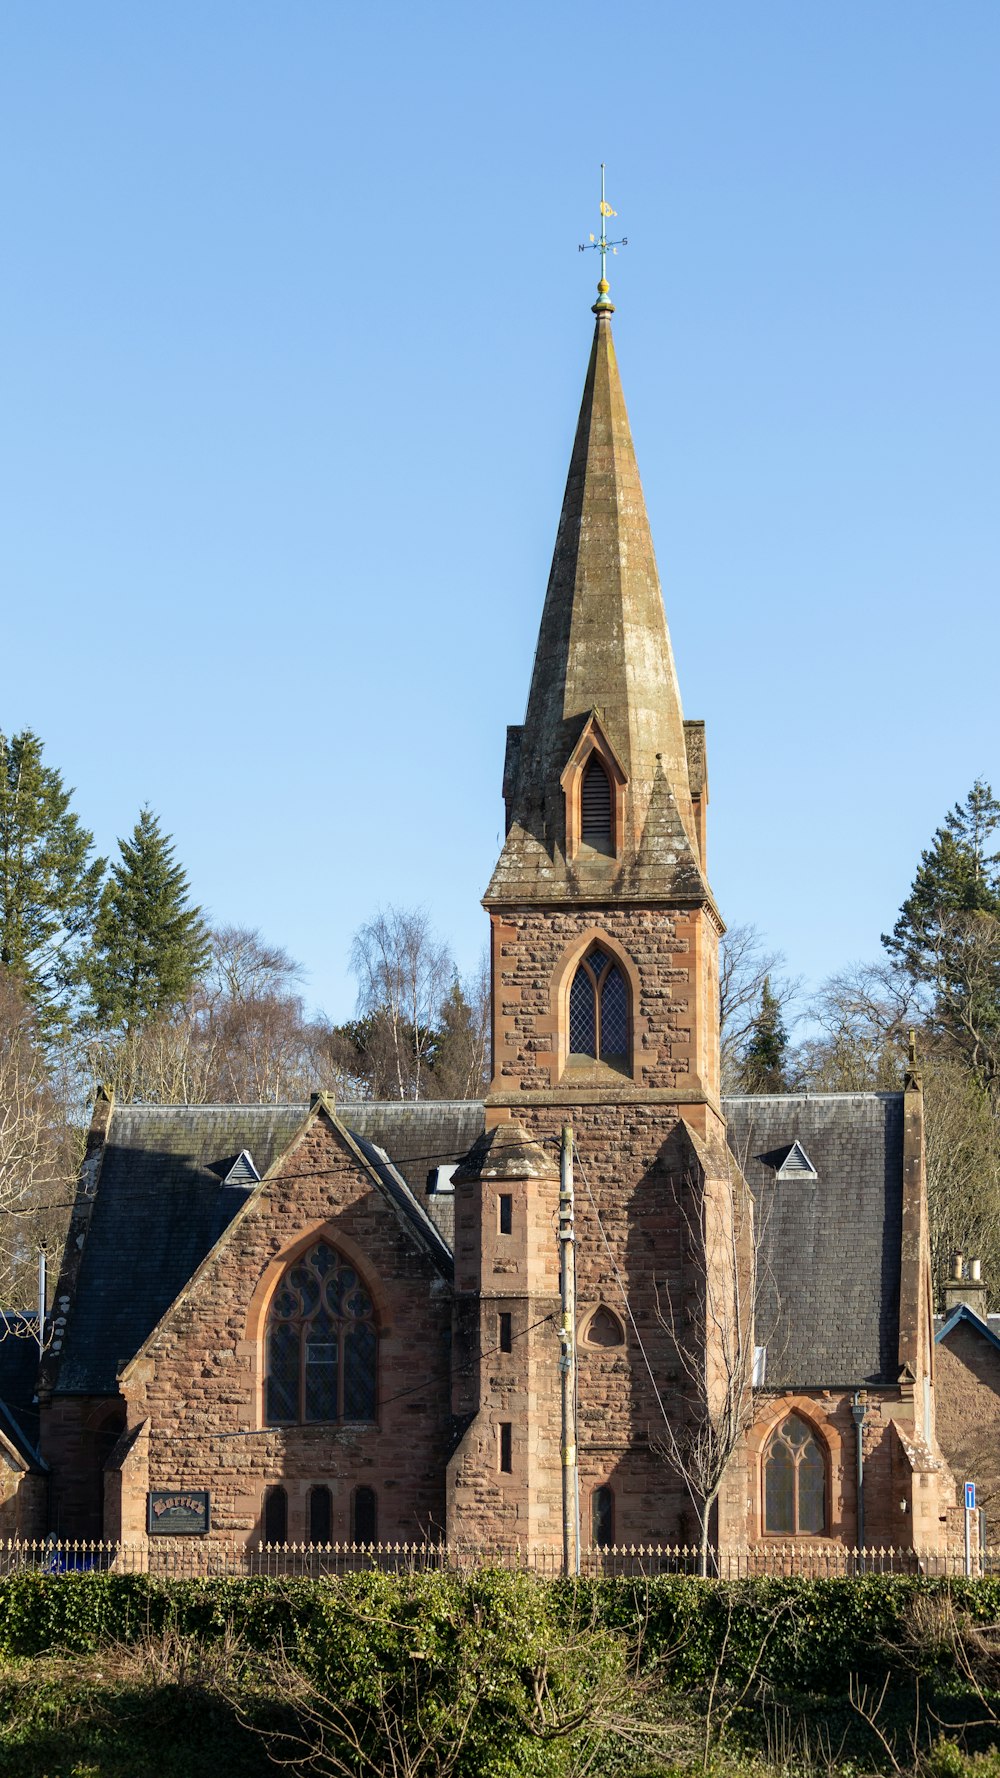 a church with a tall steeple